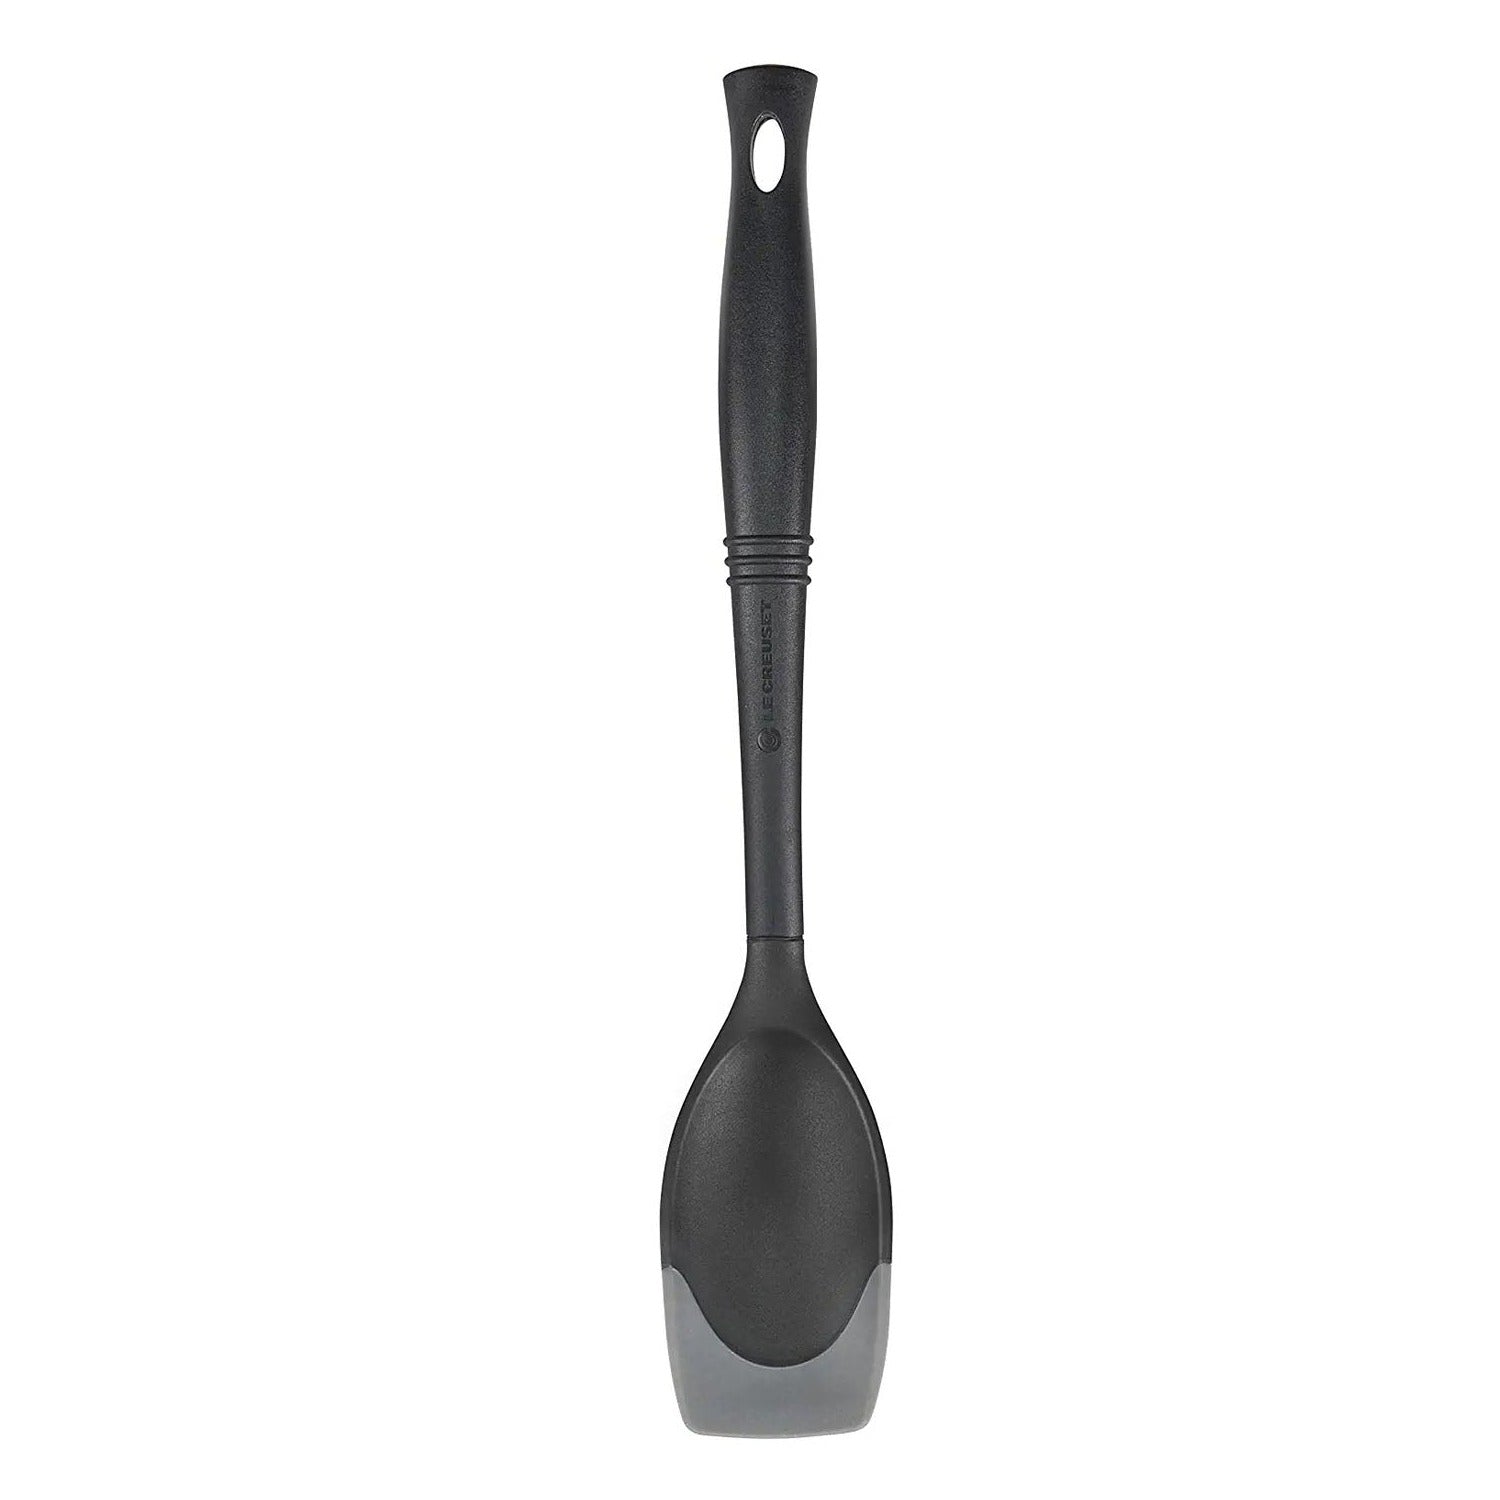 Le Creuset Revolution Bi-Material Saute Spoon, 13.5 x 2.5, Oyster